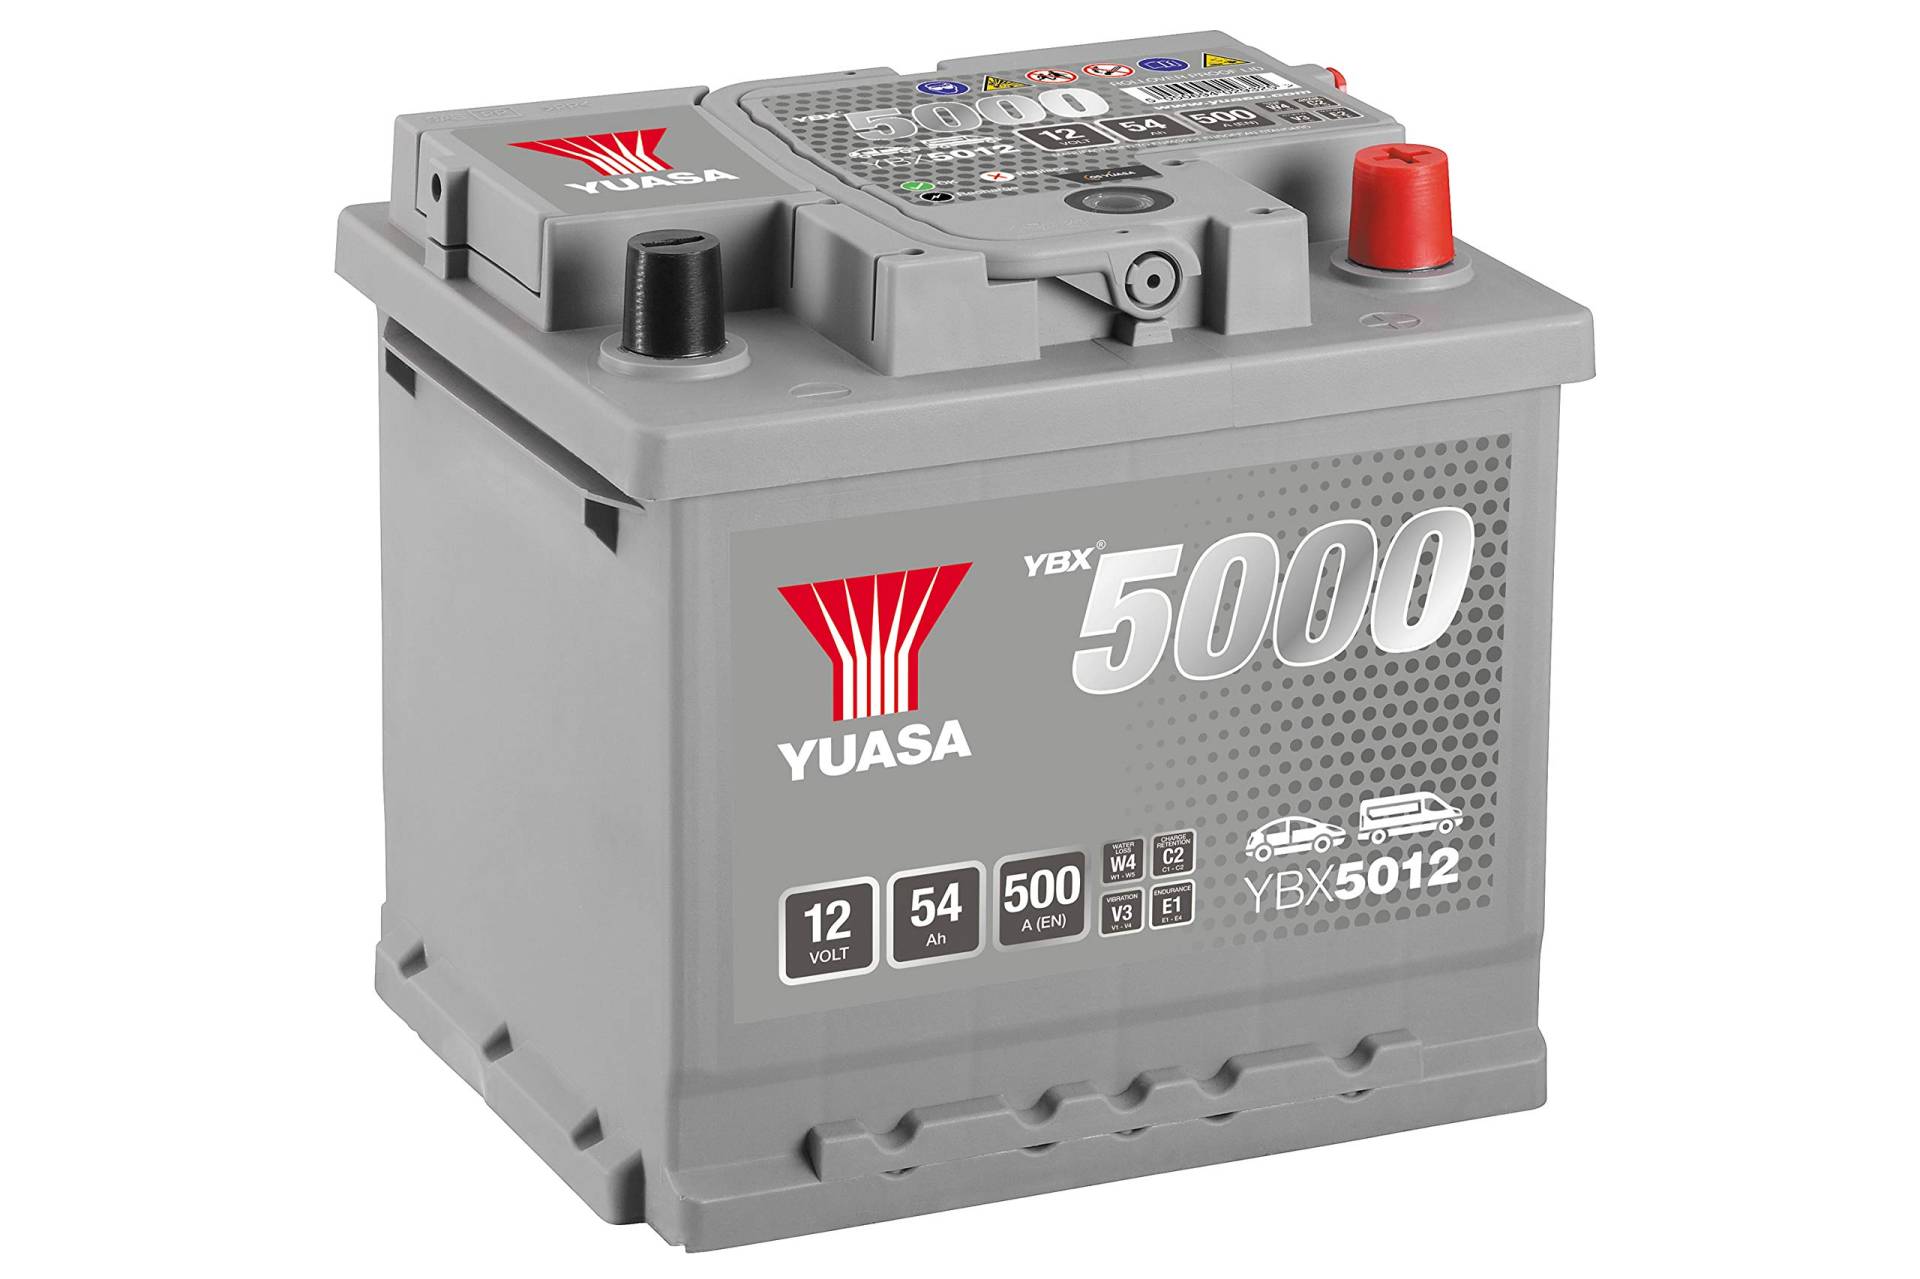 Yuasa YBX5012 Hochleistungs-Akku, 12 V, 54 Ah, 500 A, silberfarben von Yuasa